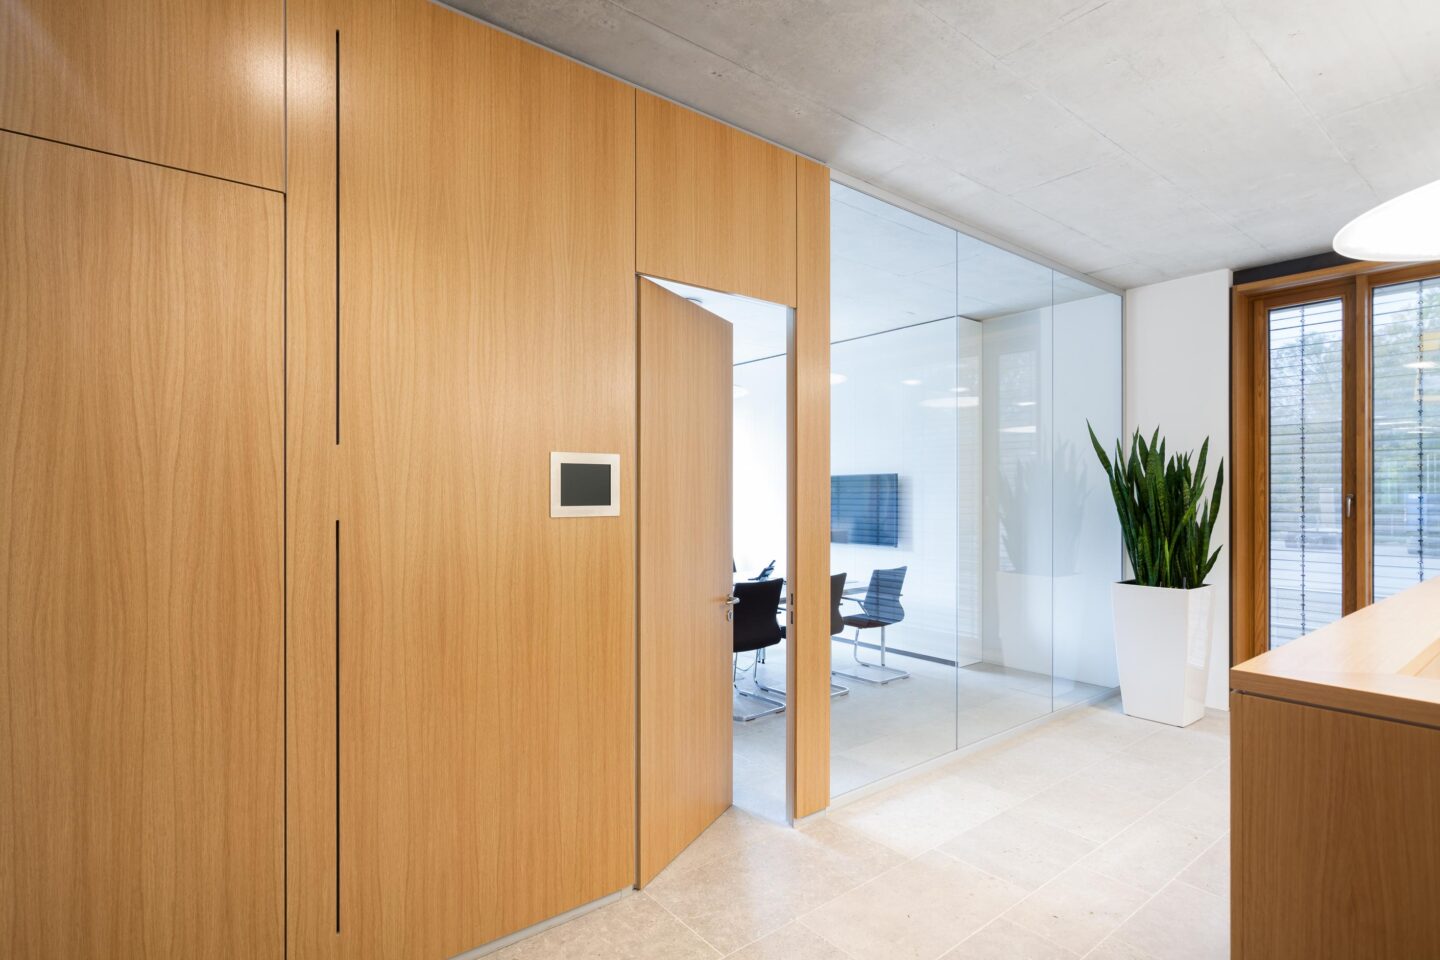 Karl Köhler GmbH │ system walls from feoco │ wooden door elements